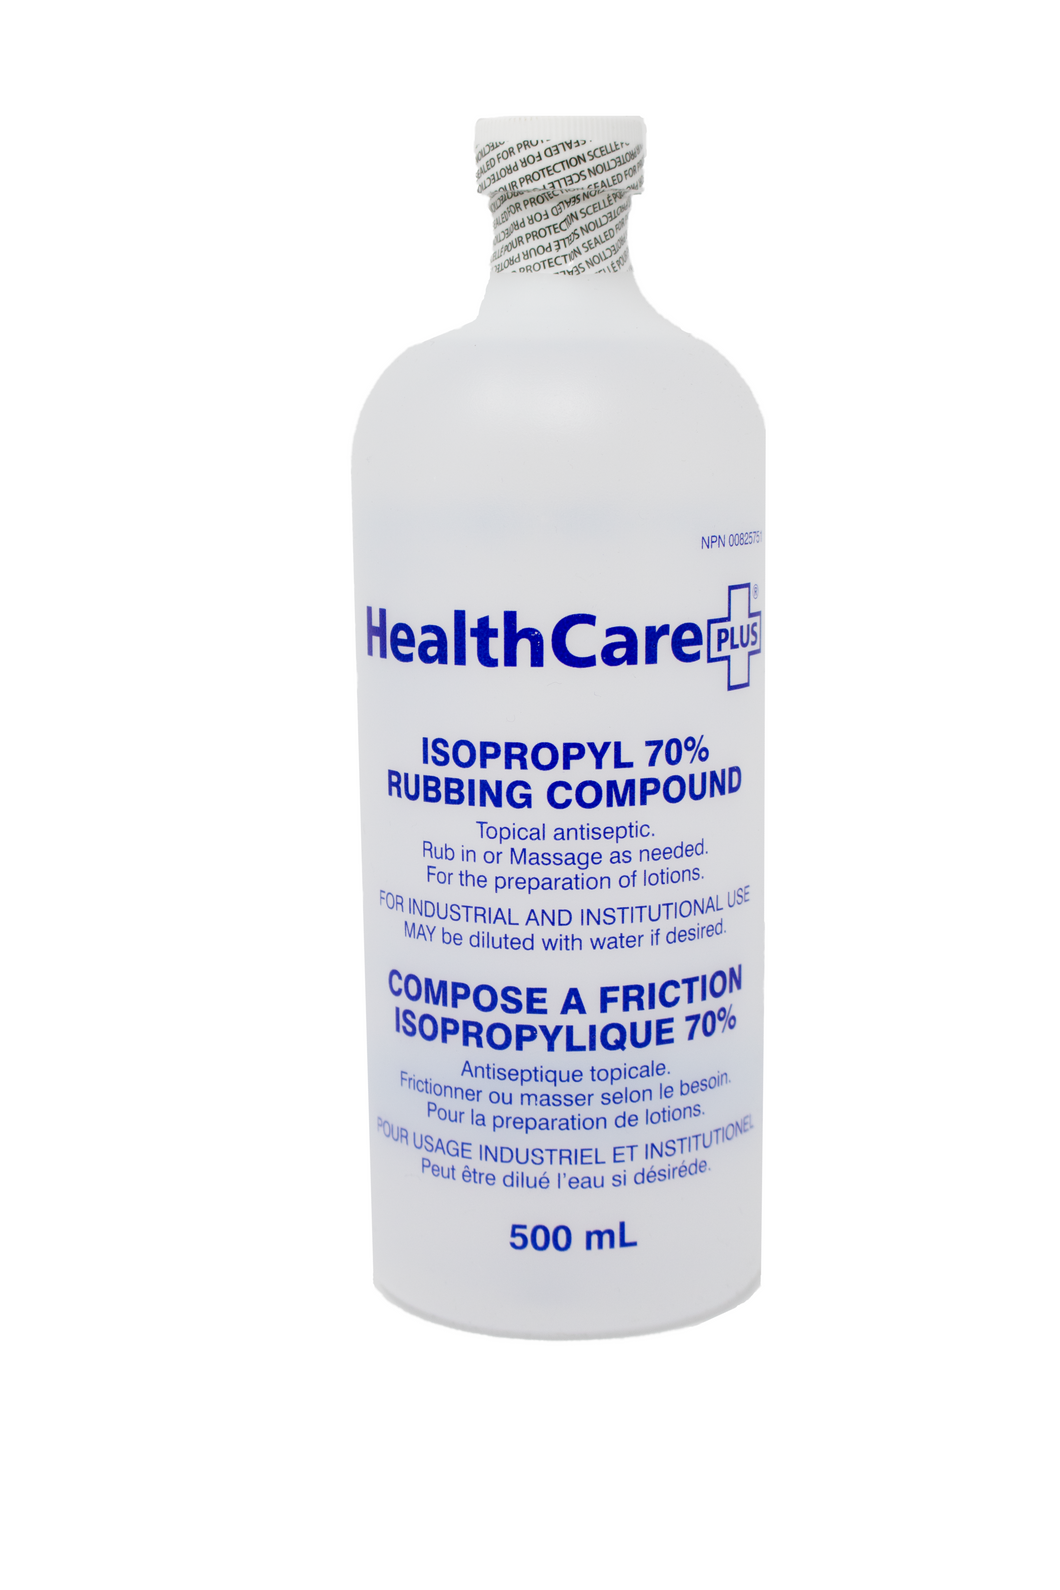 HealthCare Plus Isopropyl 70% Rubbing Compound - 500mL